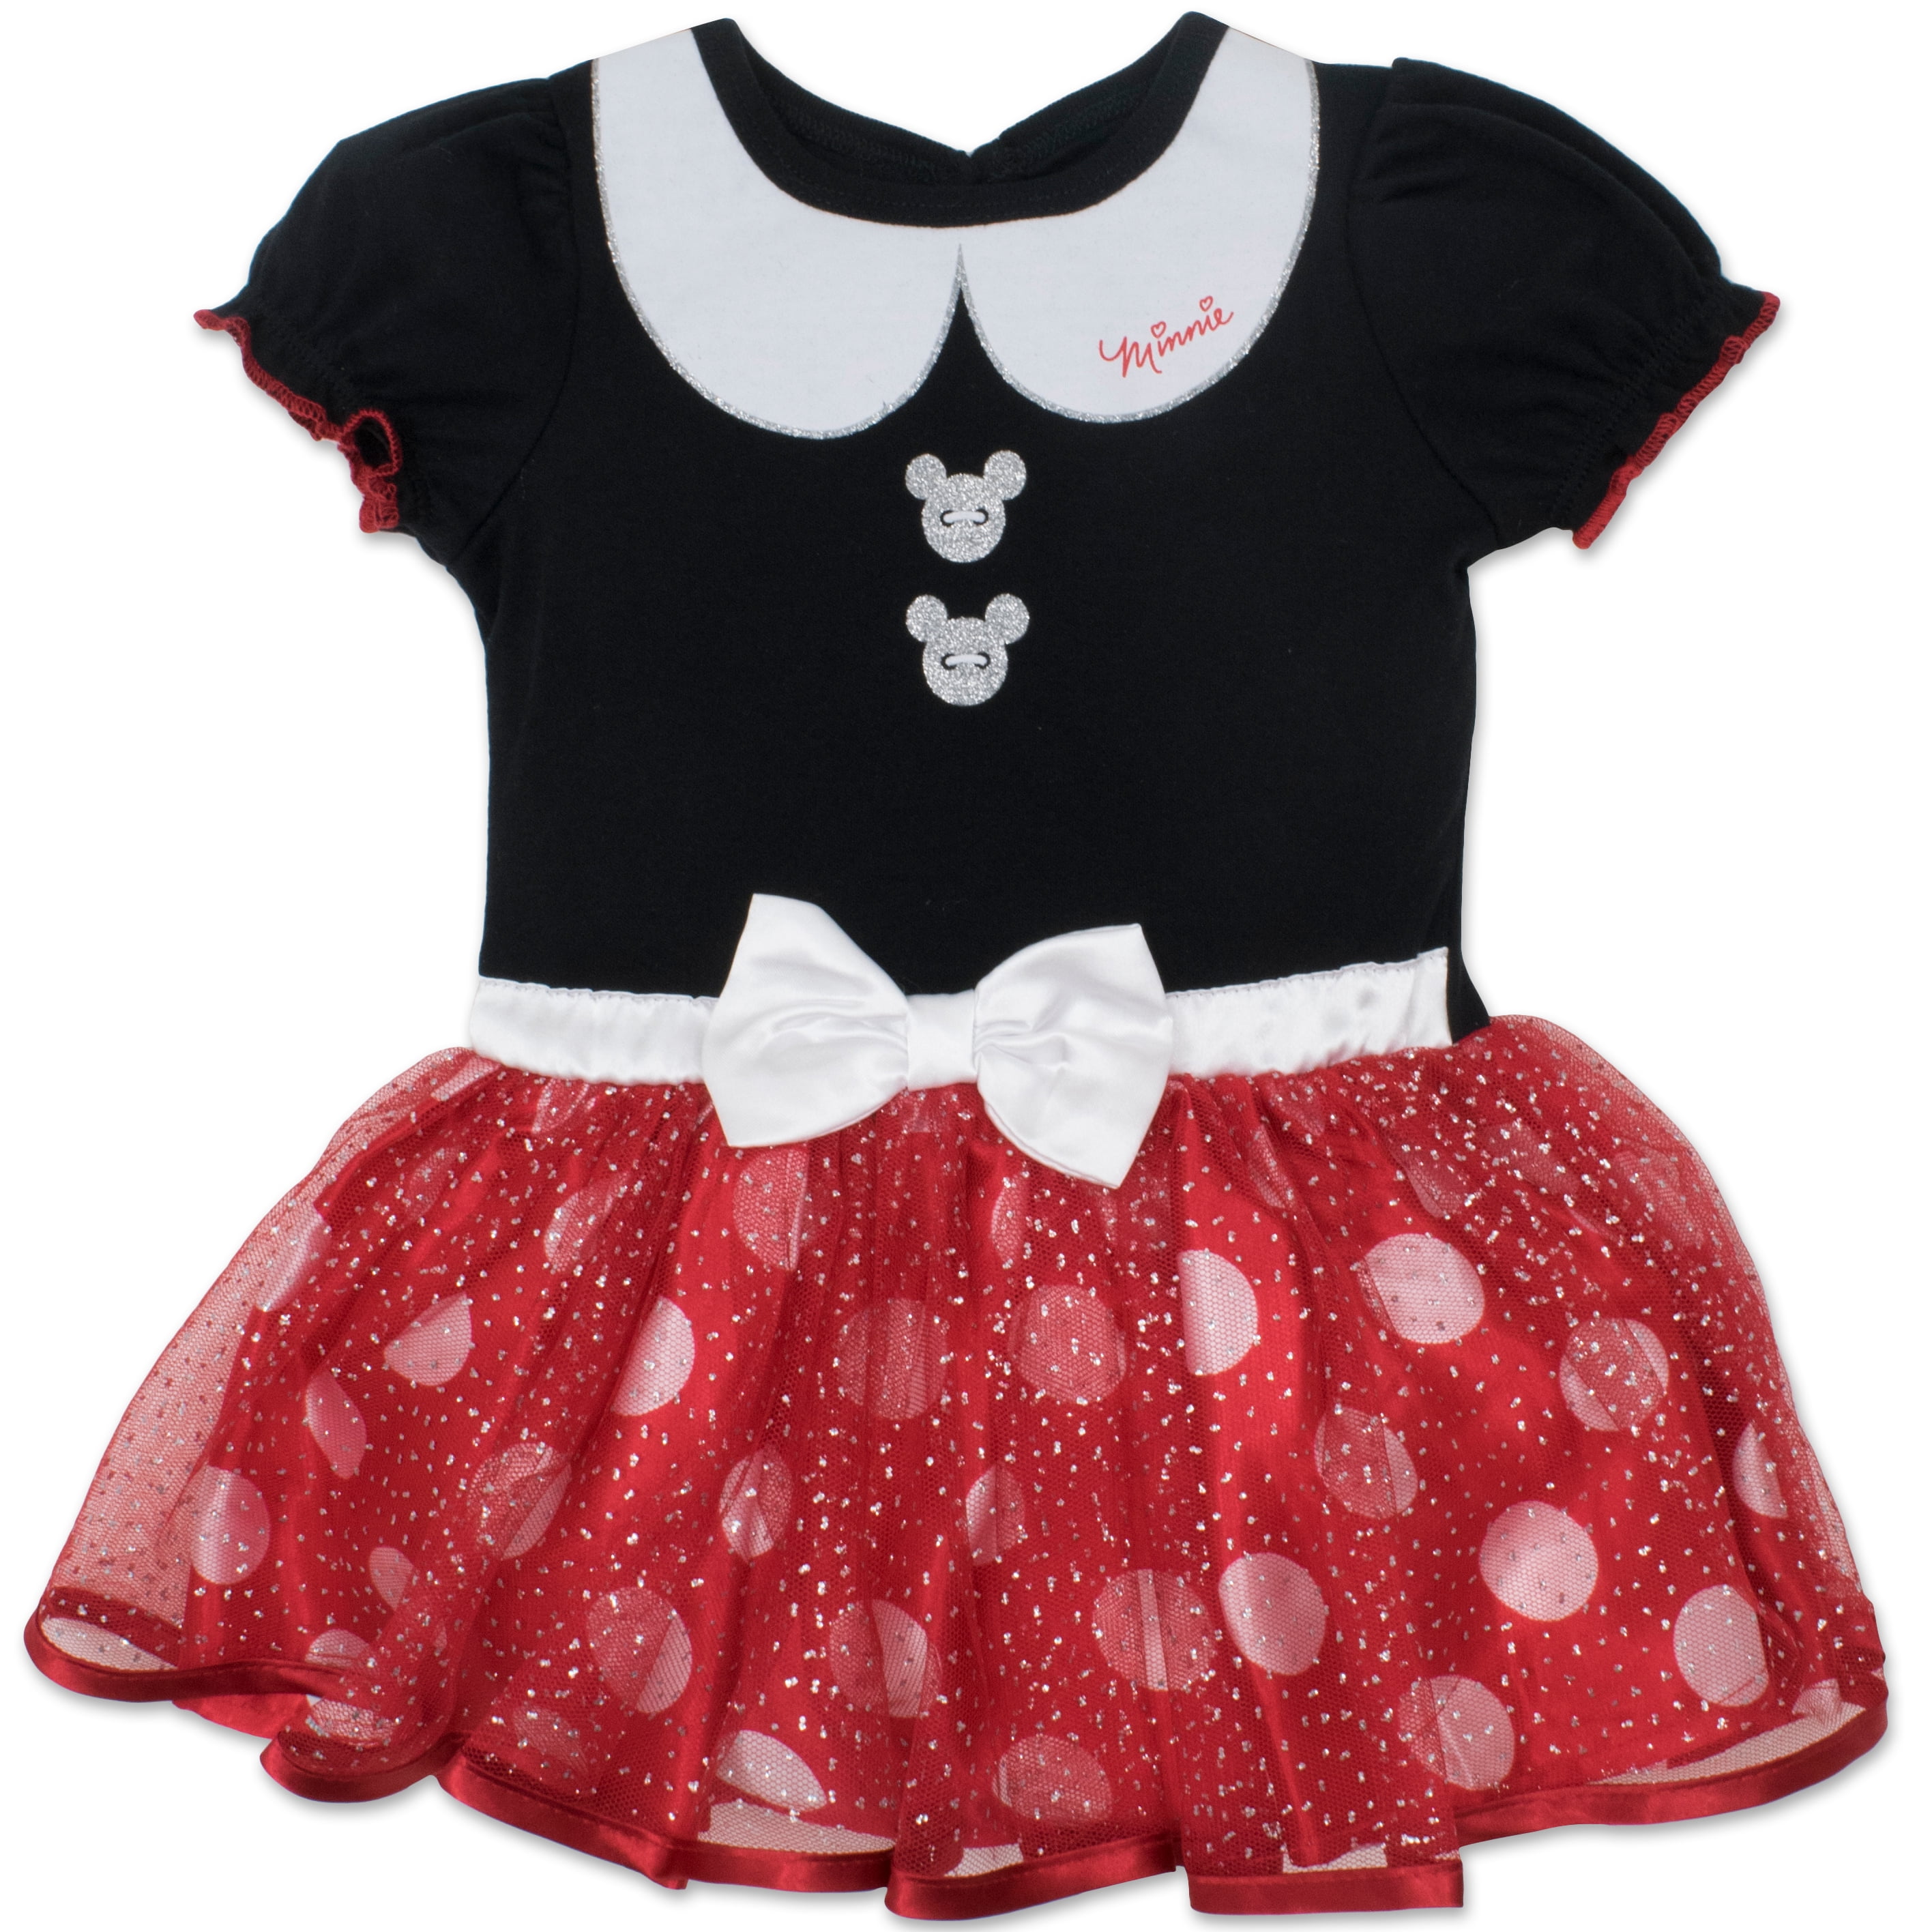 DISNEY CLOTHING Minnie Mouse Red Sparkle TuTu Dress Infant 